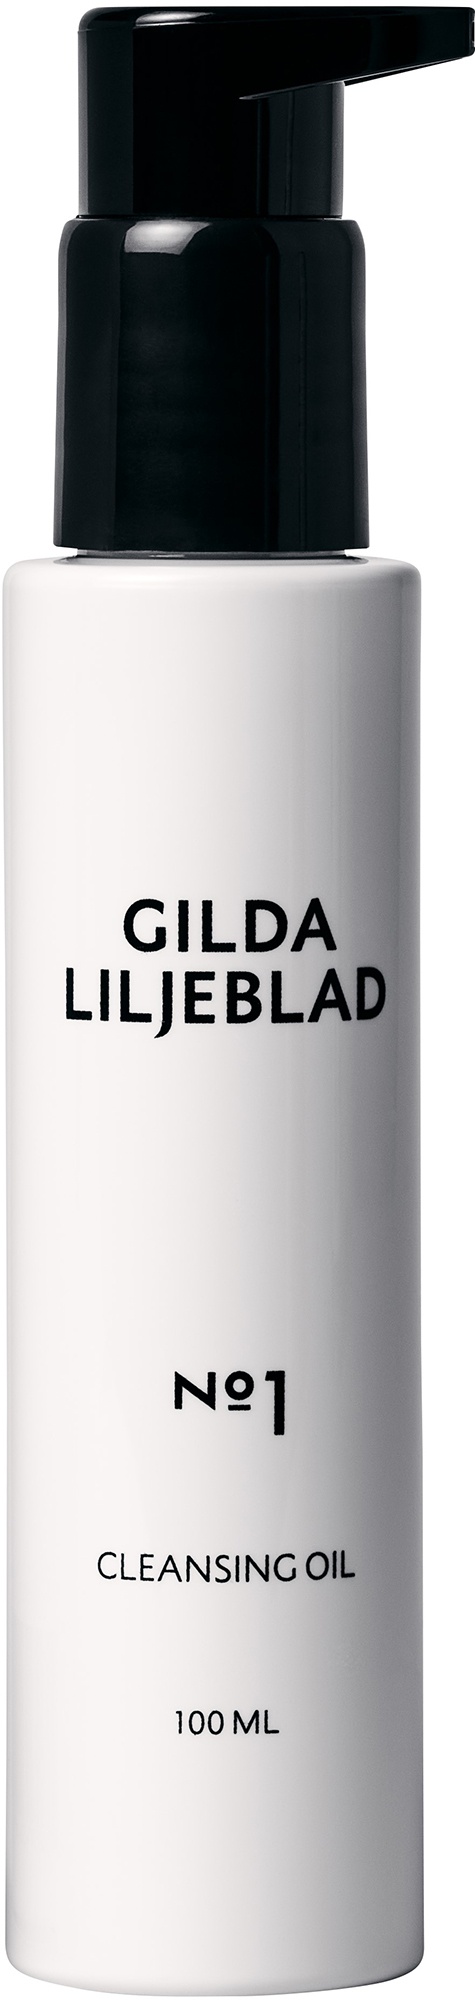 Gilda Liljeblad Cleansing Oil